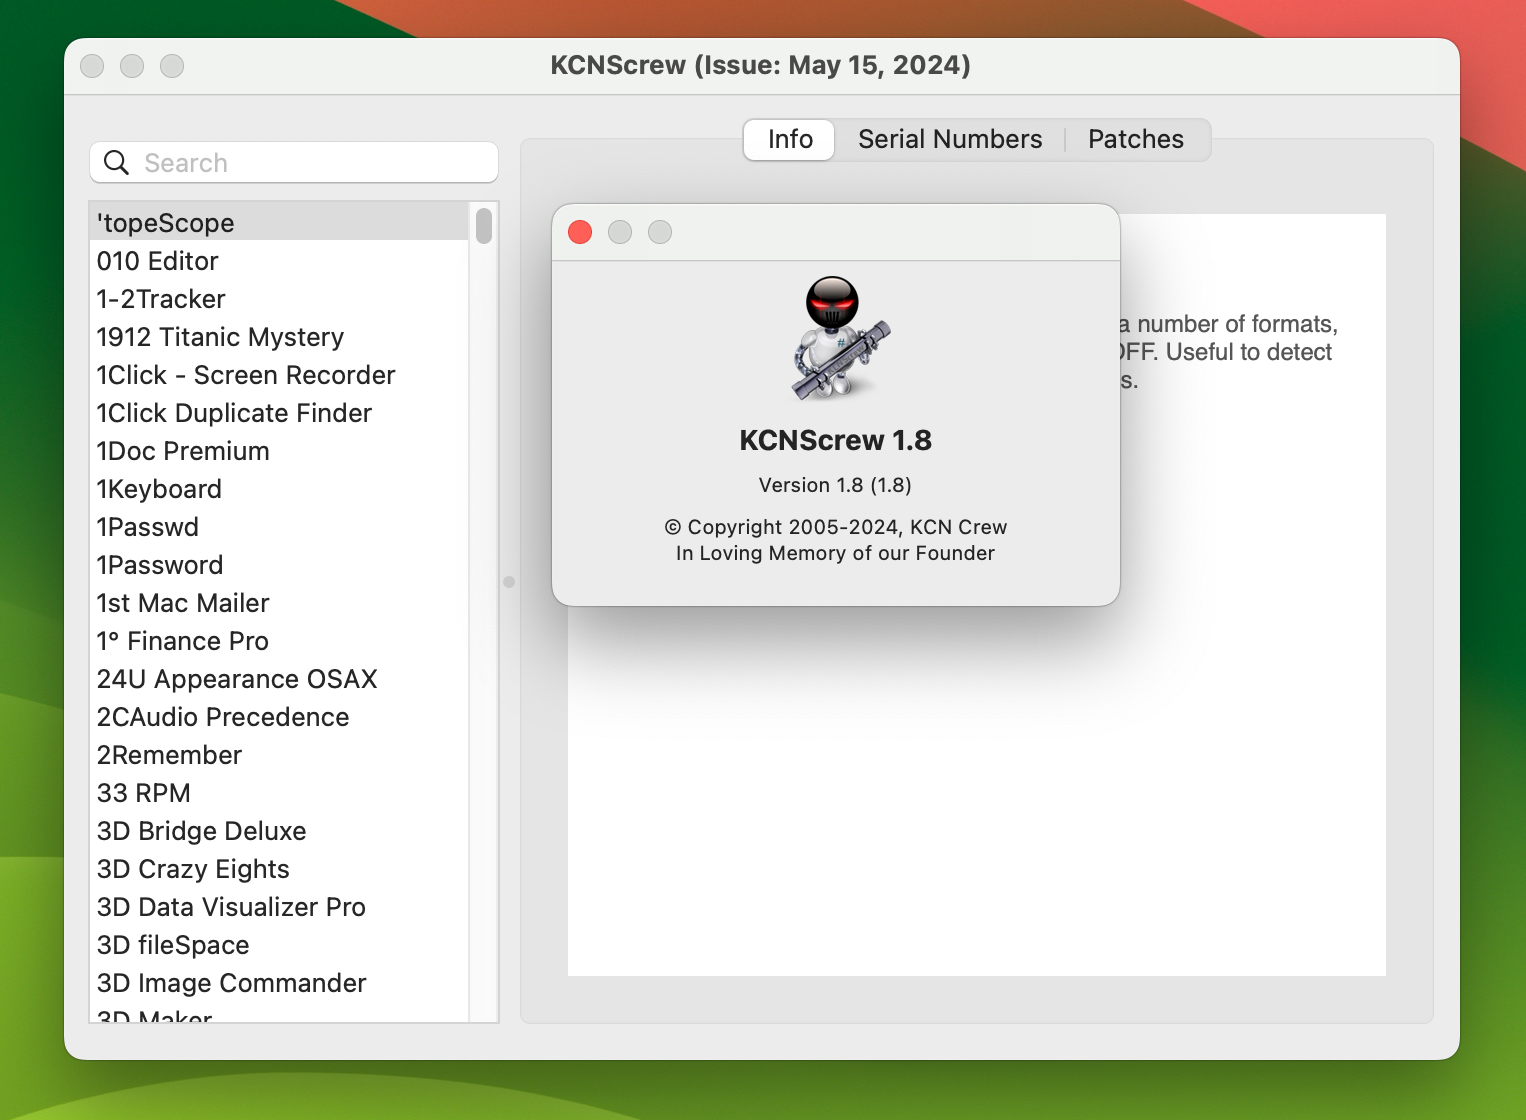 KCNcrew Pack for Mac v1.8 (05-15-2024) 软件序列号查询工具 免激活下载-1